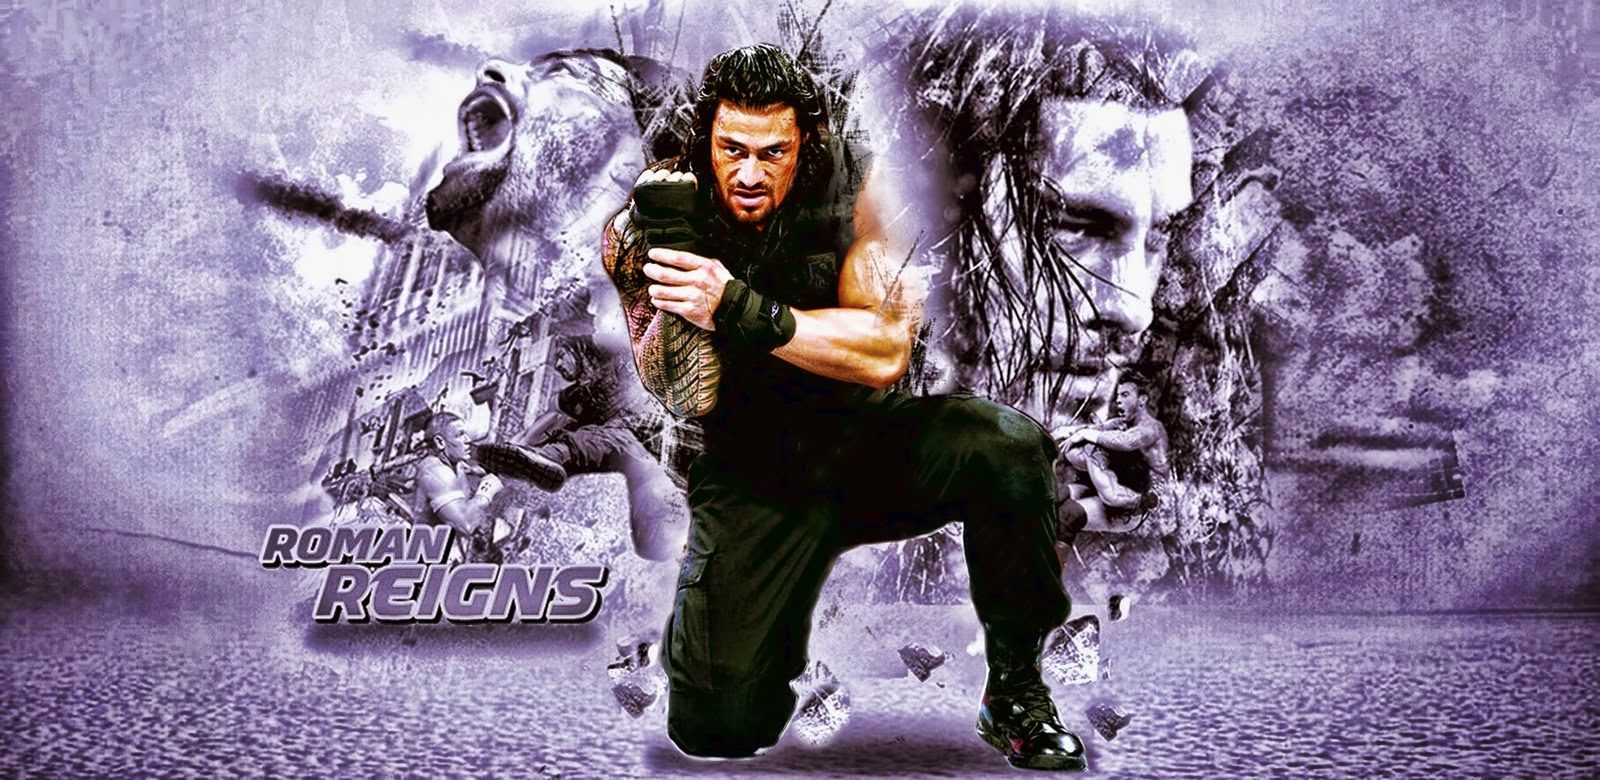 Roman Reigns Wwe Wallpapers 2015 - Roman Reigns And Undertaker - HD Wallpaper 